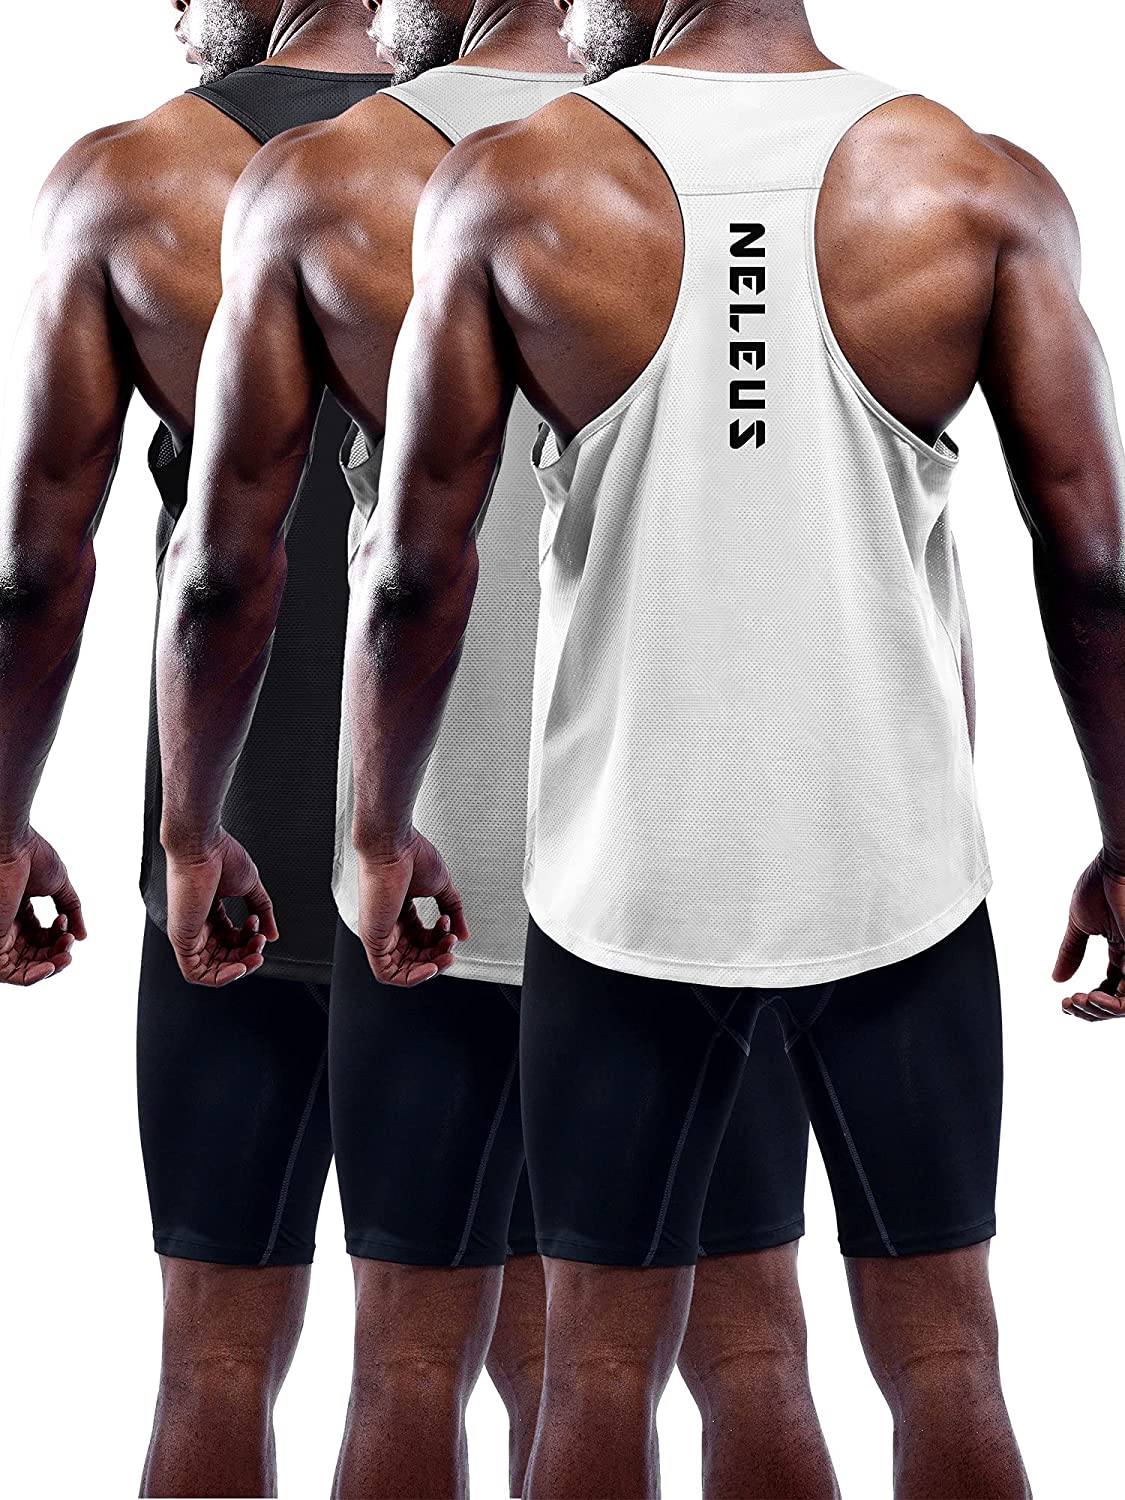 Neleus Men's 3 Pack Workout Running Tank Top Sleeveless Gym Athletic Shirts 